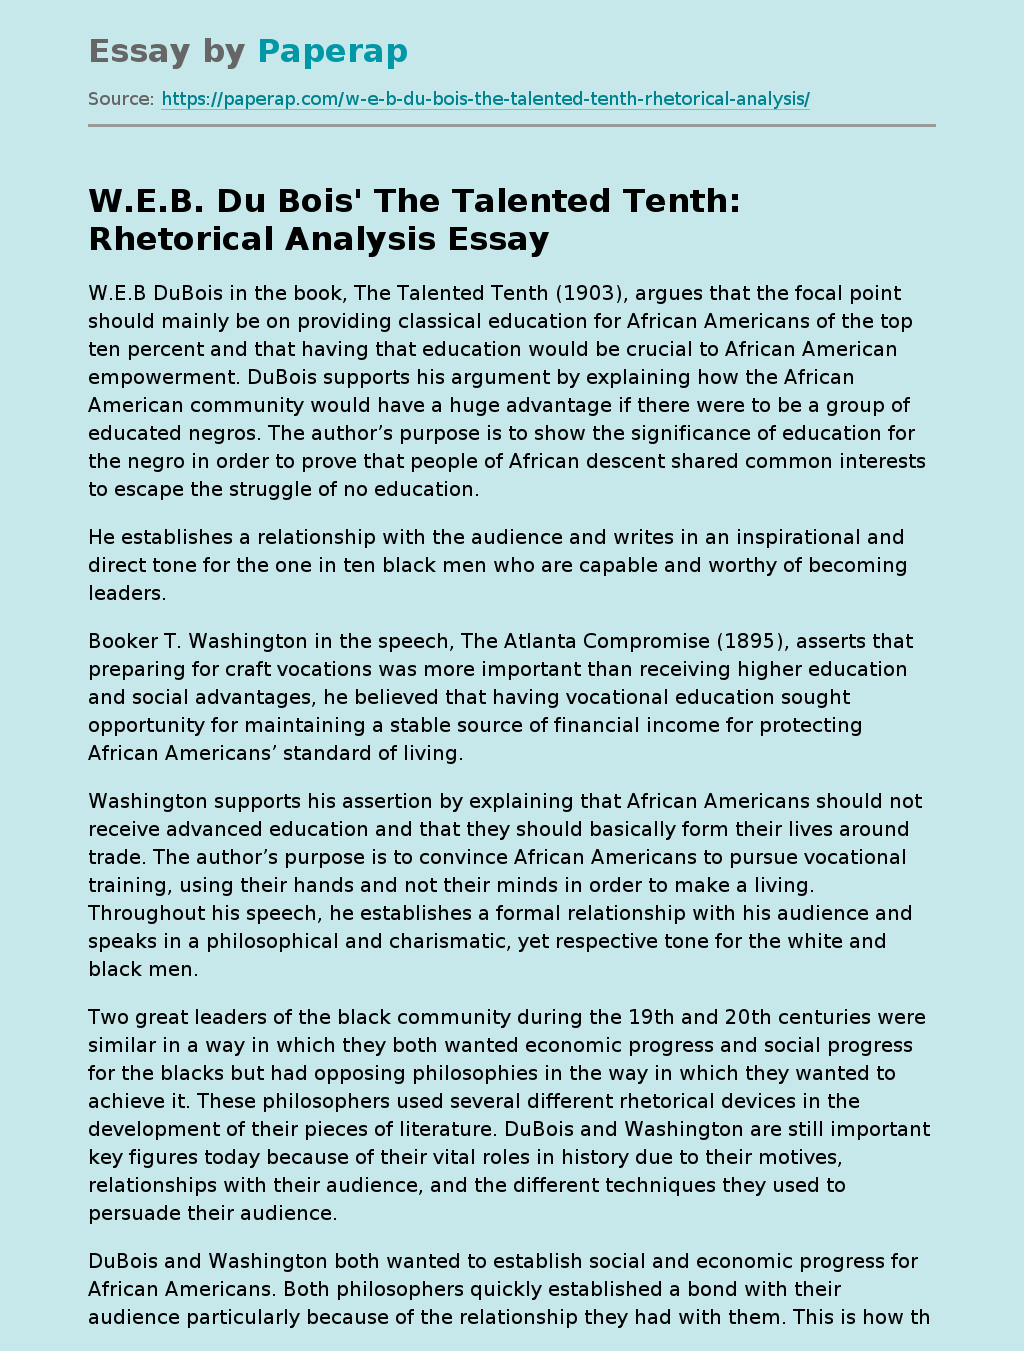 W.E.B. Du Bois' The Talented Tenth: Rhetorical Analysis